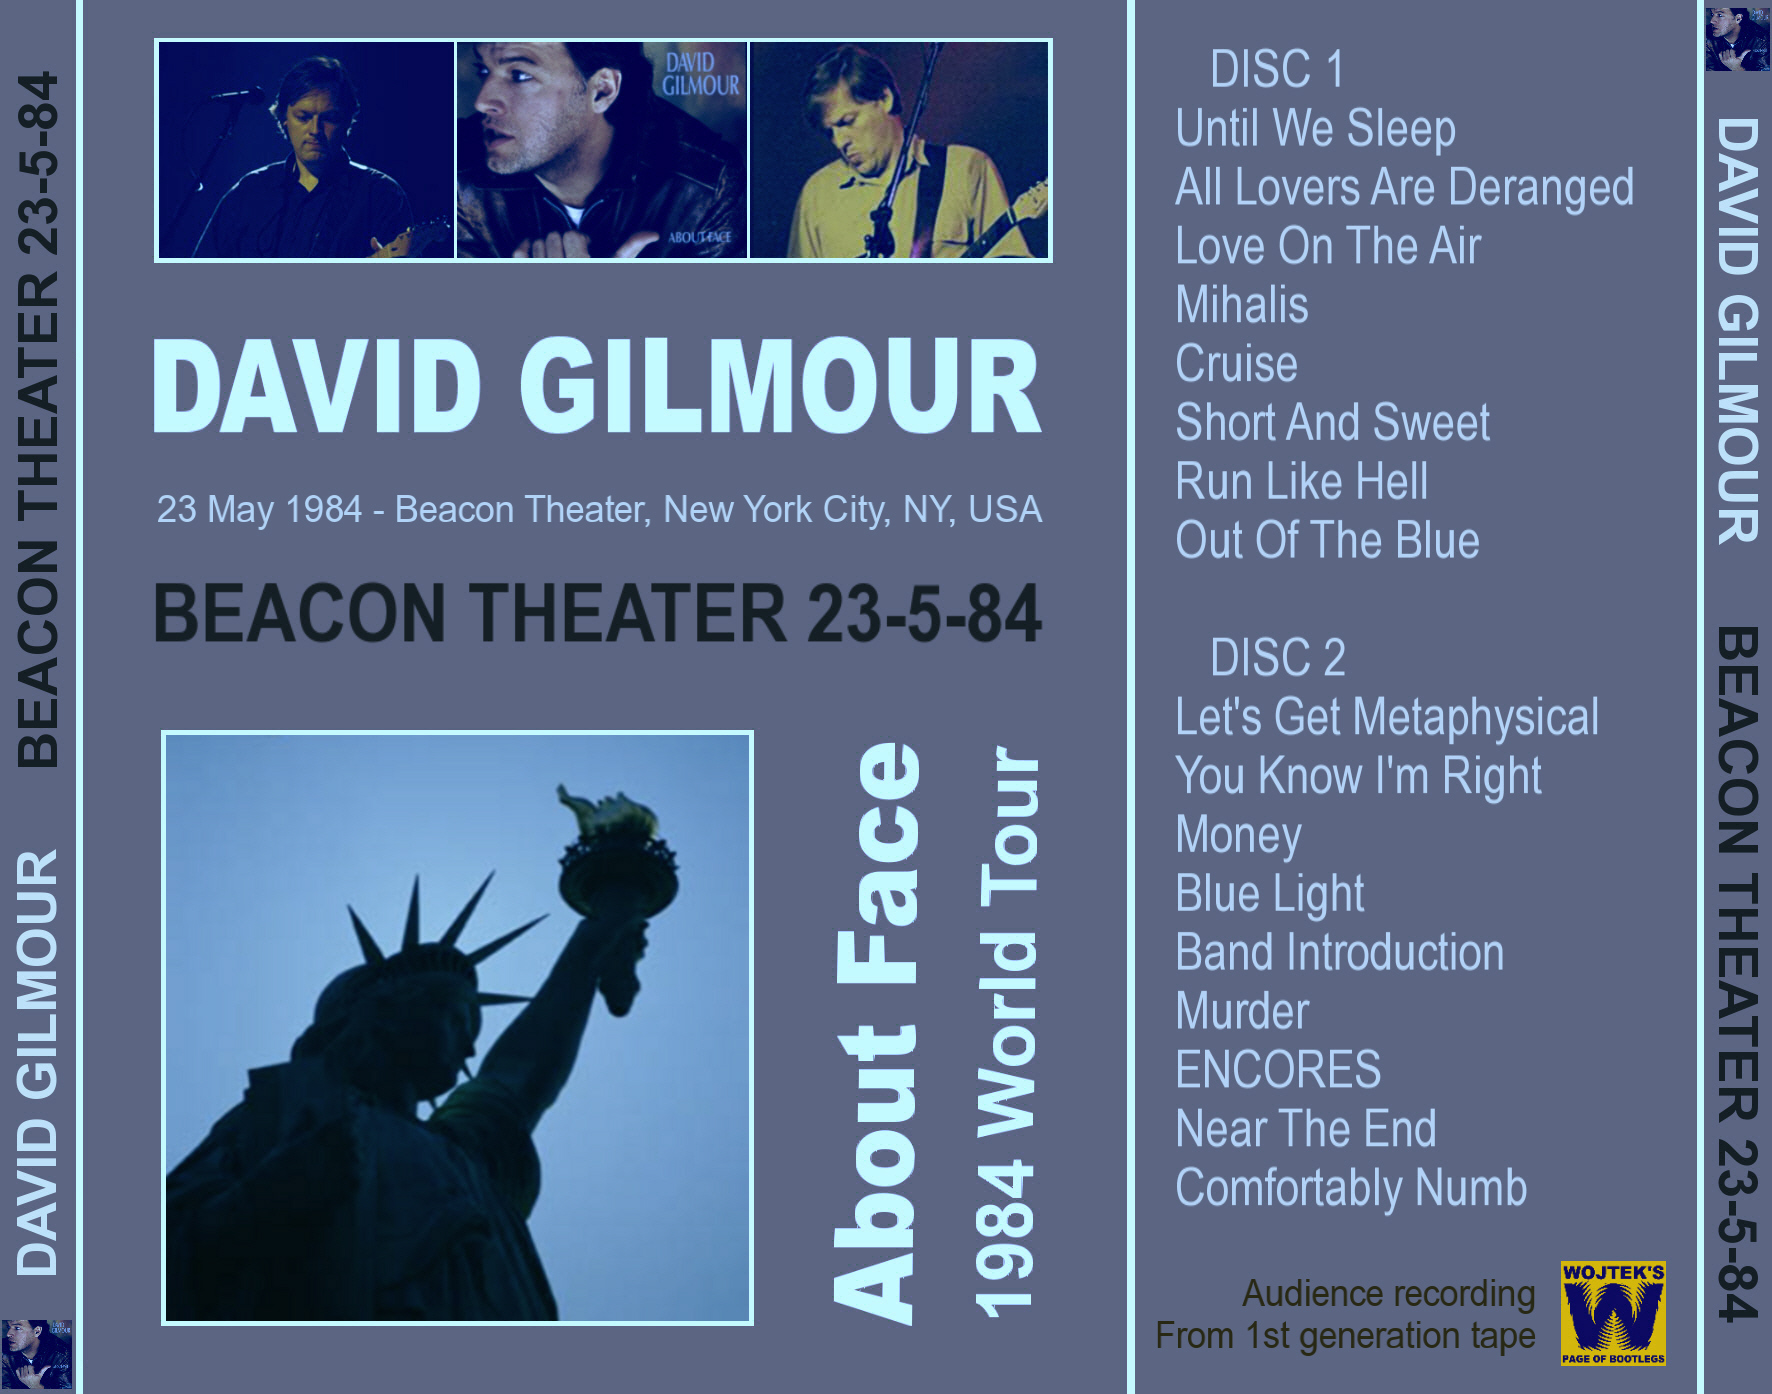 DavidGilmour1984-05-23BeaconTheaterNYC.jpg